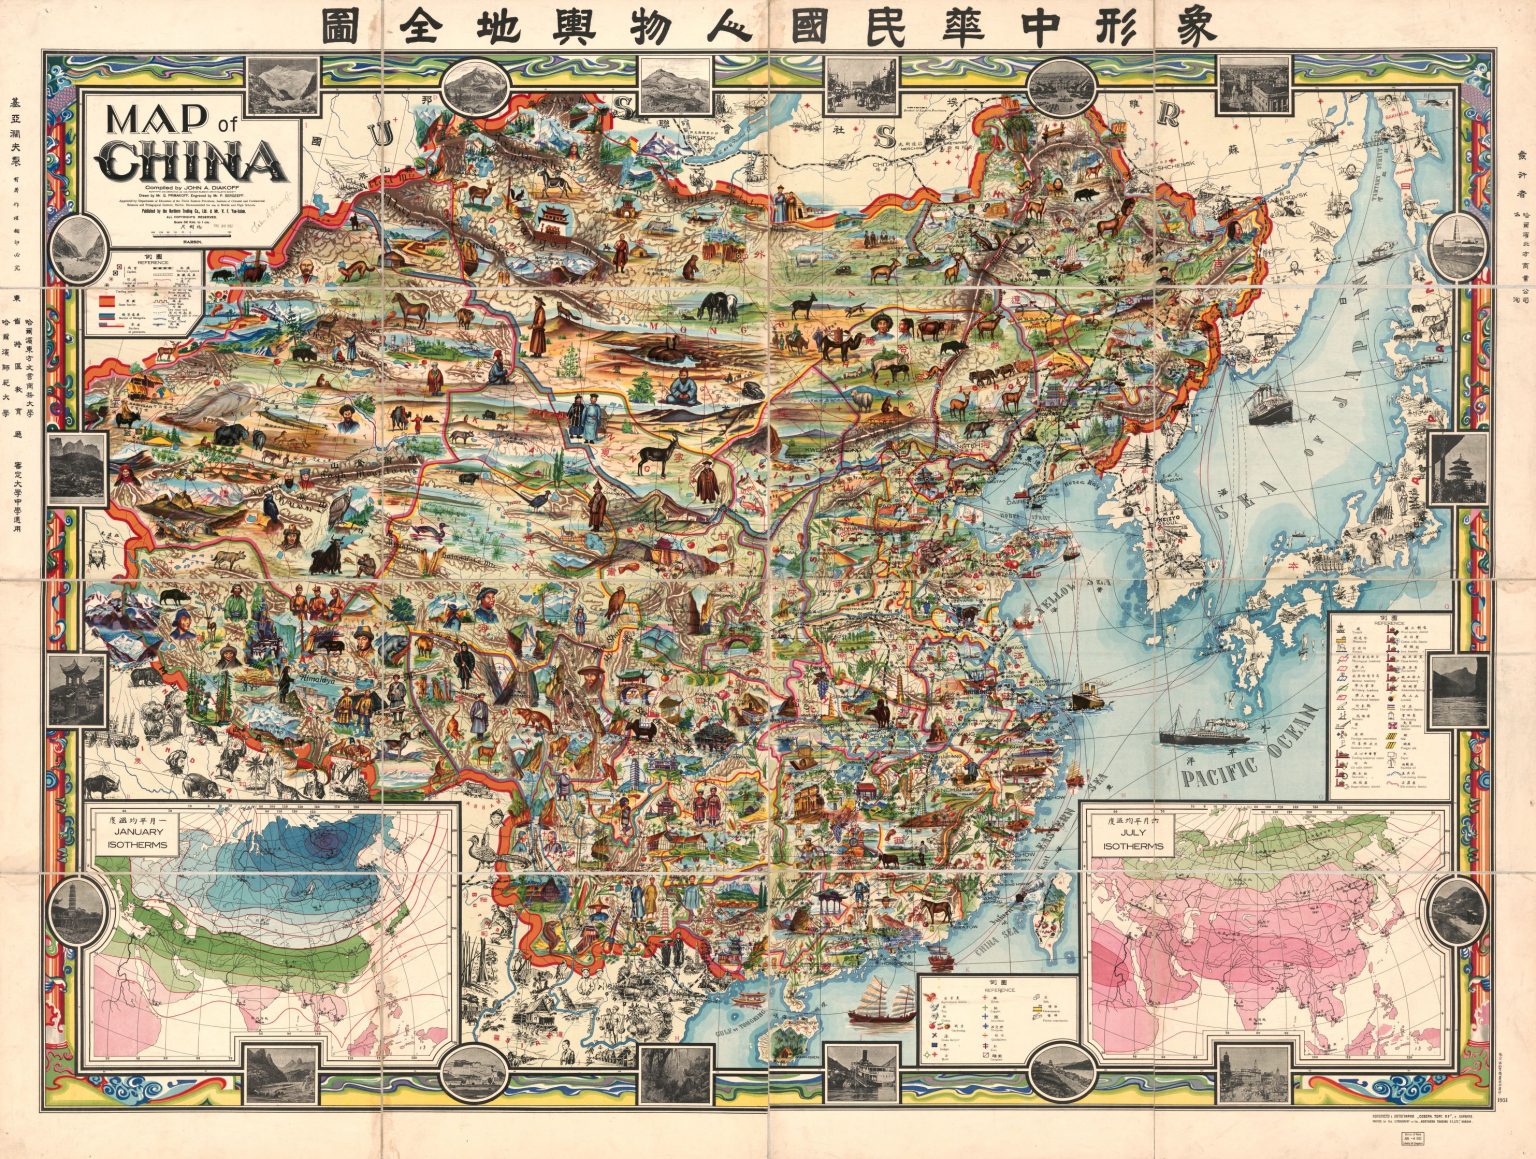 Mapa-pictorico-de-China-de-1930-1536x1159.jpg